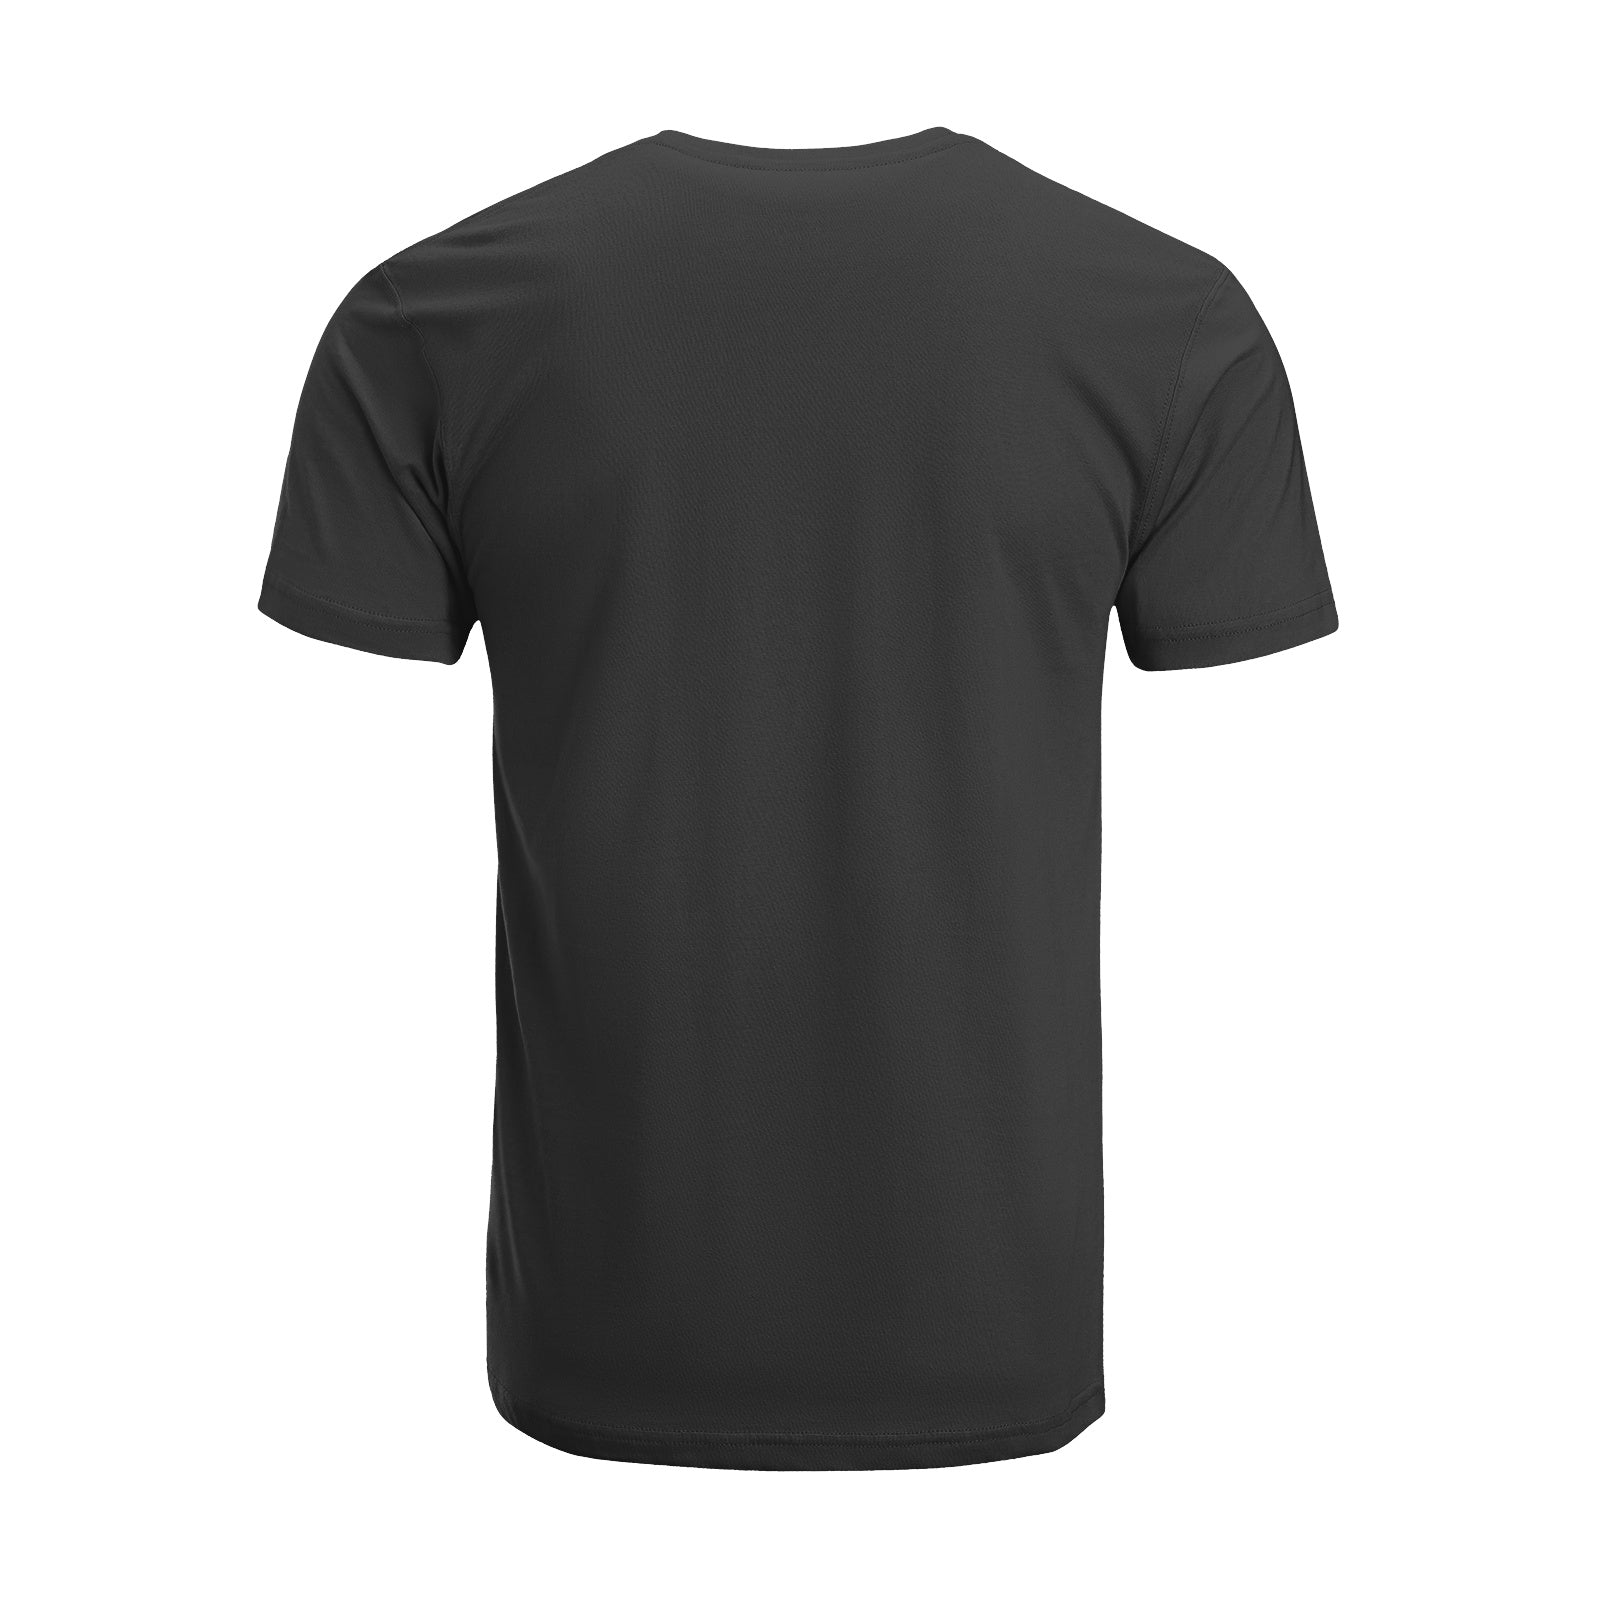 Unisex Short Sleeve Crew Neck Cotton Jersey T-Shirt CAT 22 - Tara-Outfits.com